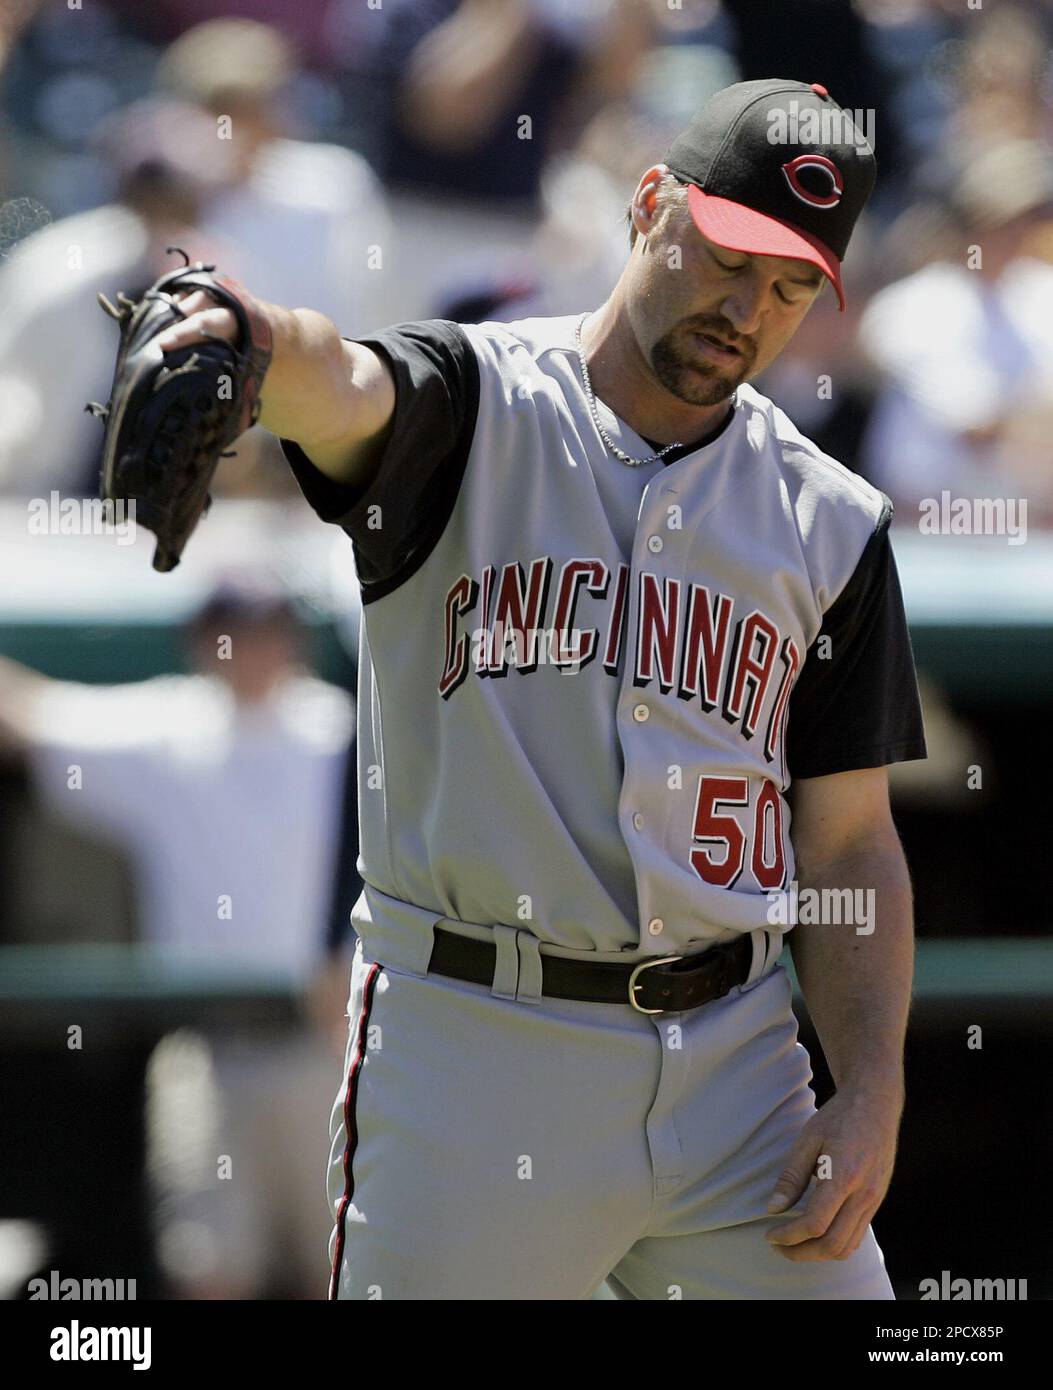 File:Cleveland Indians center fielder Grady Sizemore (24